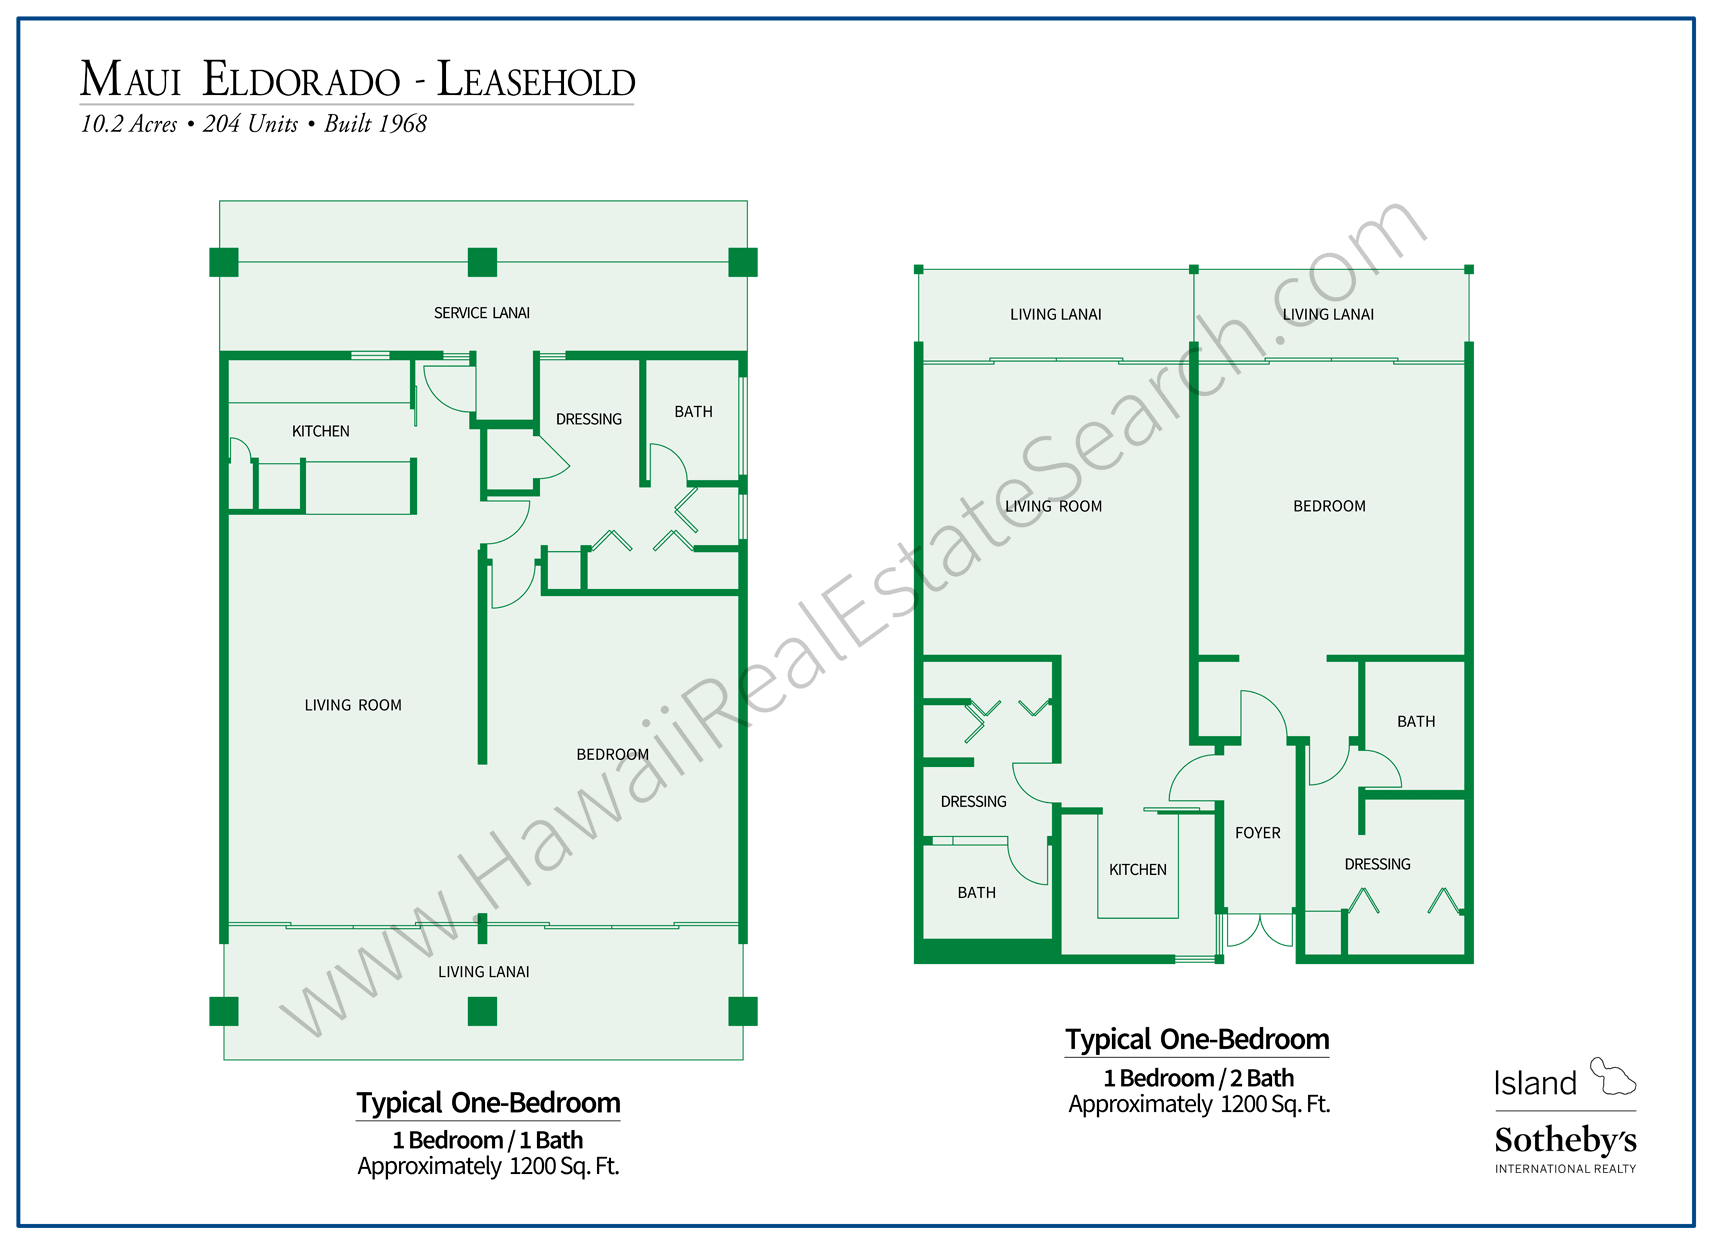 Maui Eldorado Floor Plans Set 2